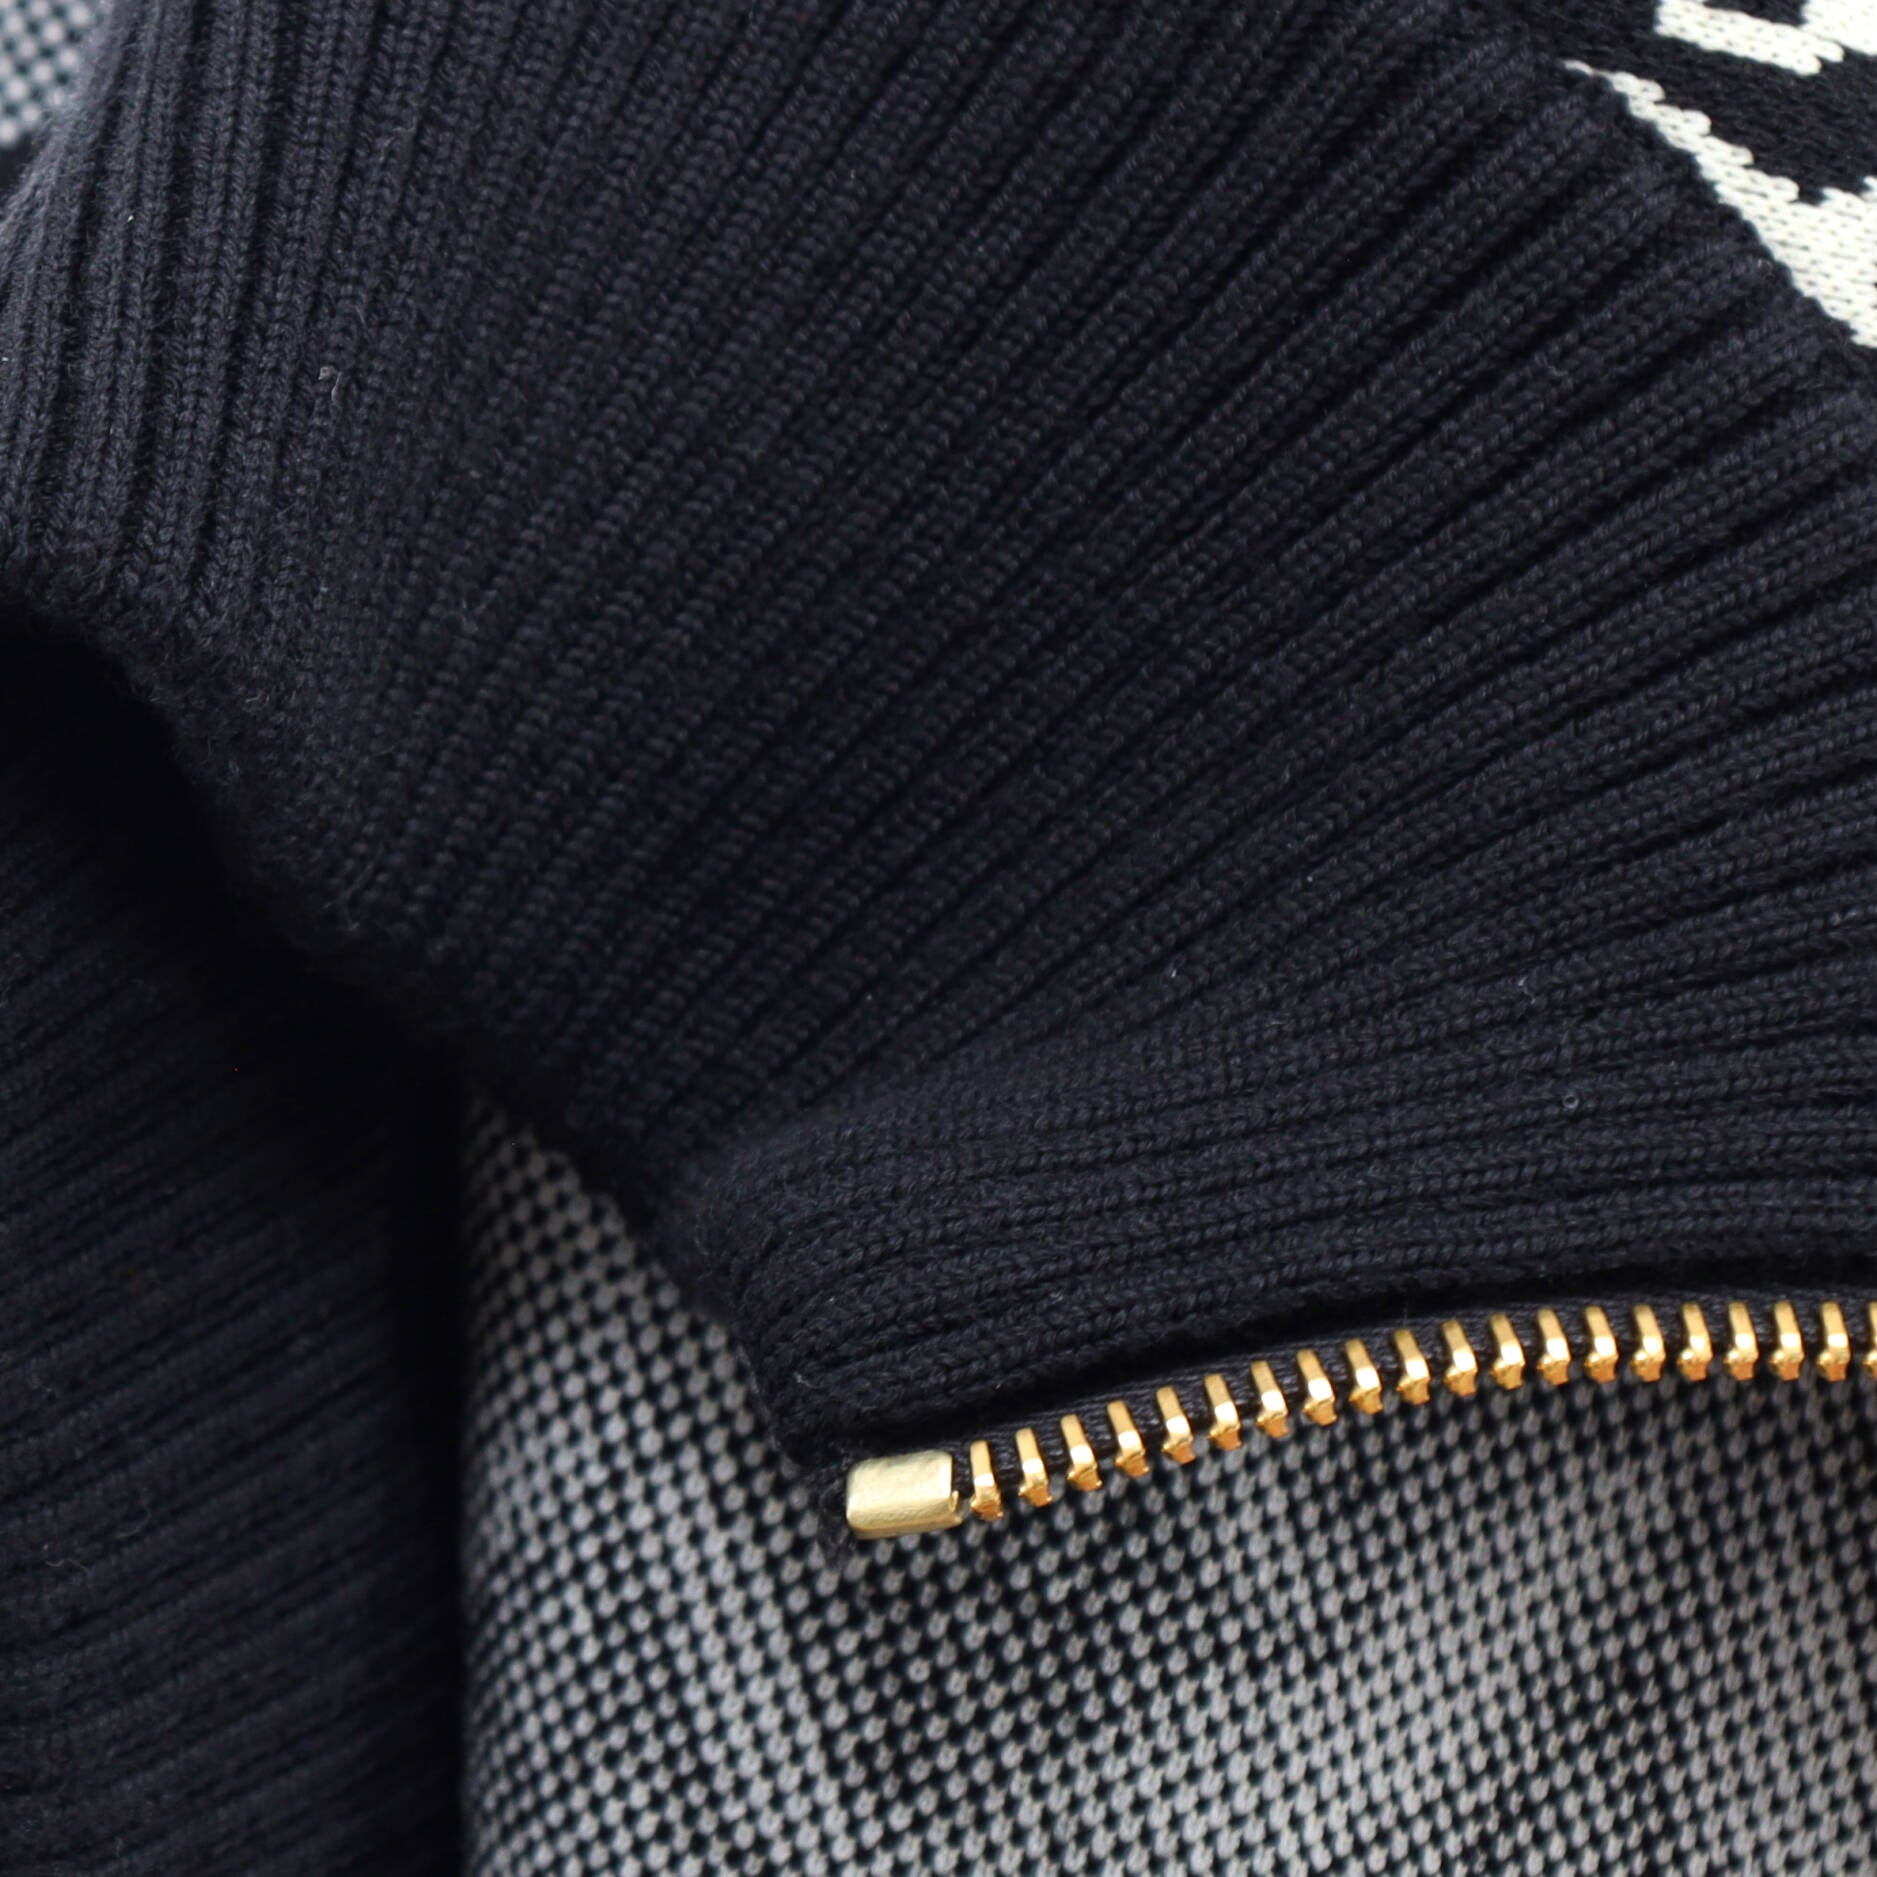 Louis Vuitton Women's Bomber Jacket Limited Edition Since 1854 Monogram  Jacquard Wool Blend Black 1654523